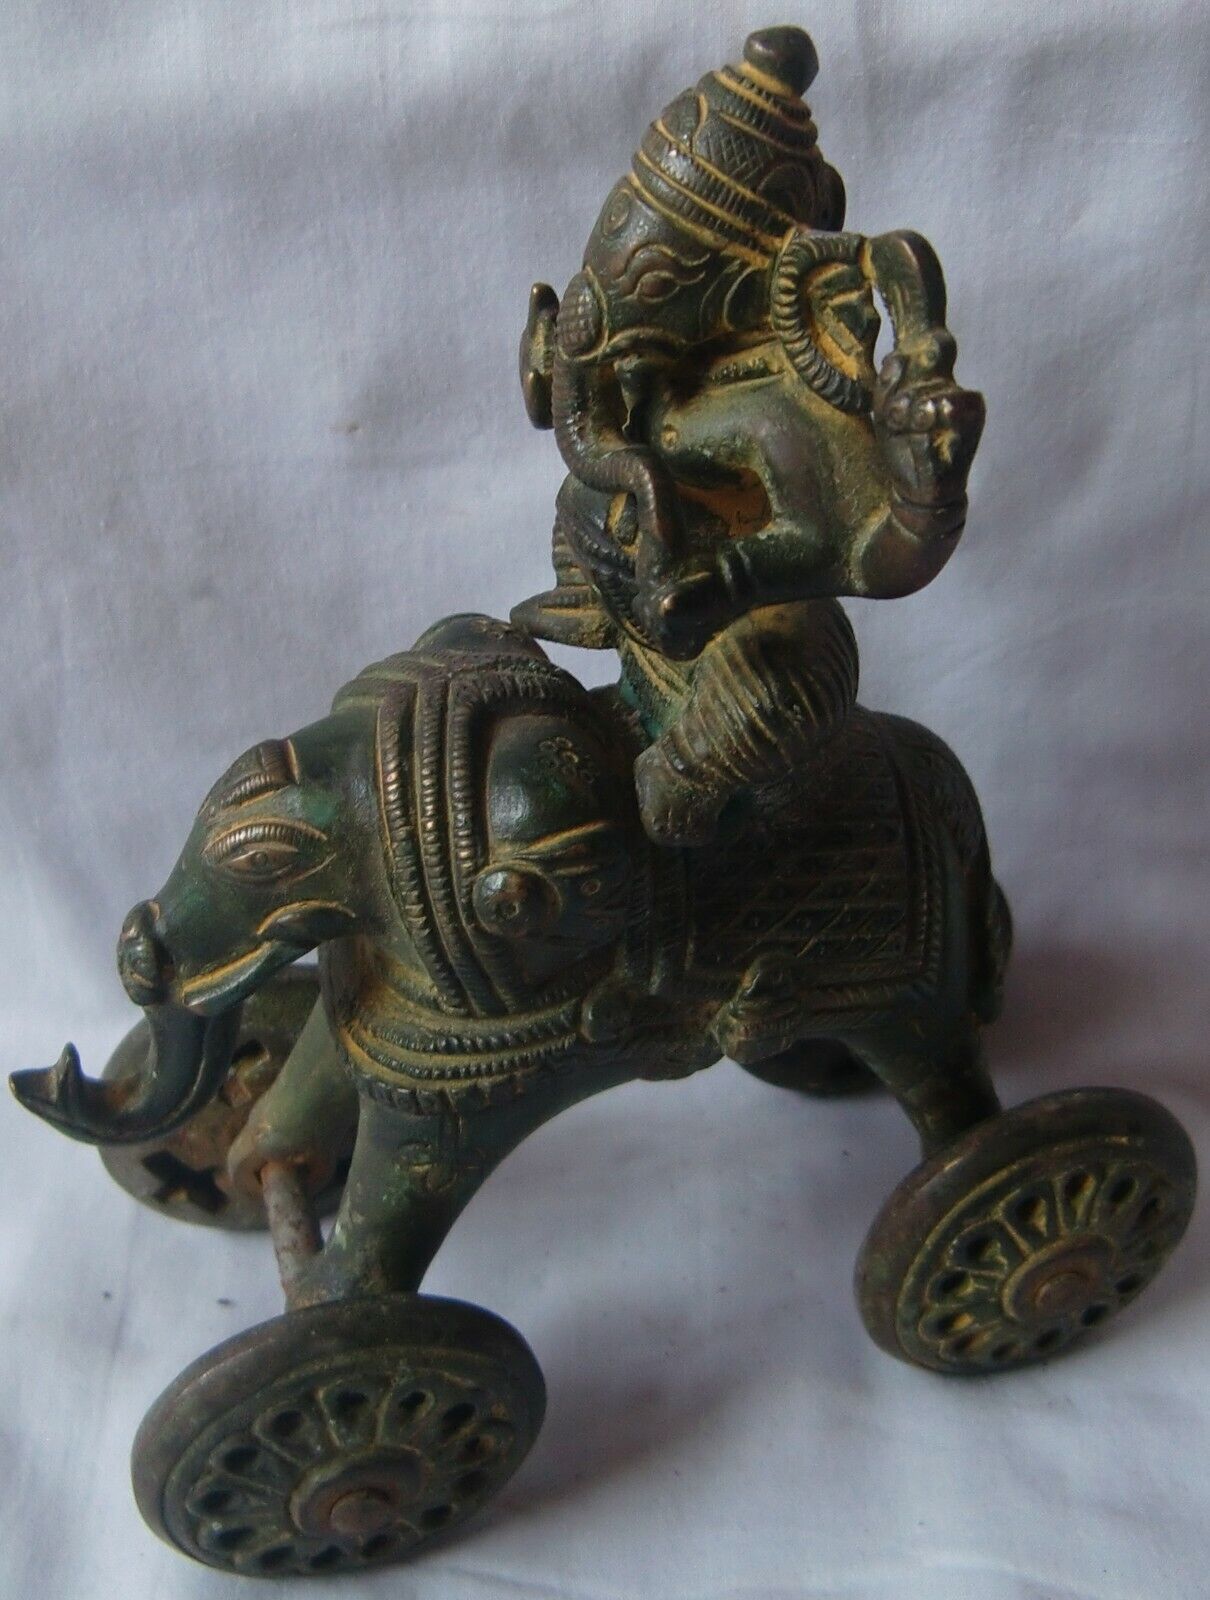 Brass lord ganesha statue on elephant animal with moving wheels rider figurine